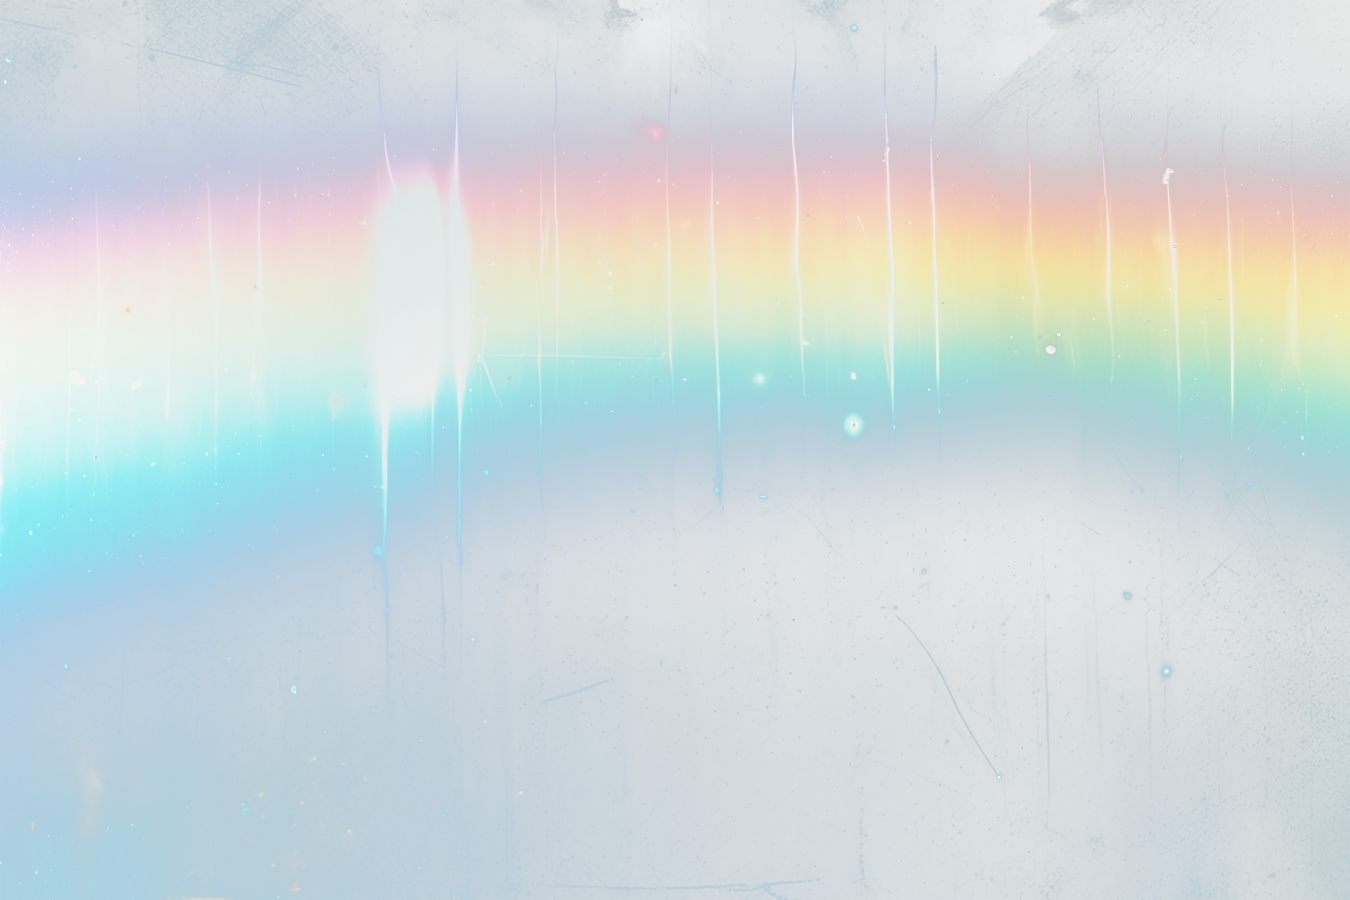 Film texture with rainbow leak overlay effect